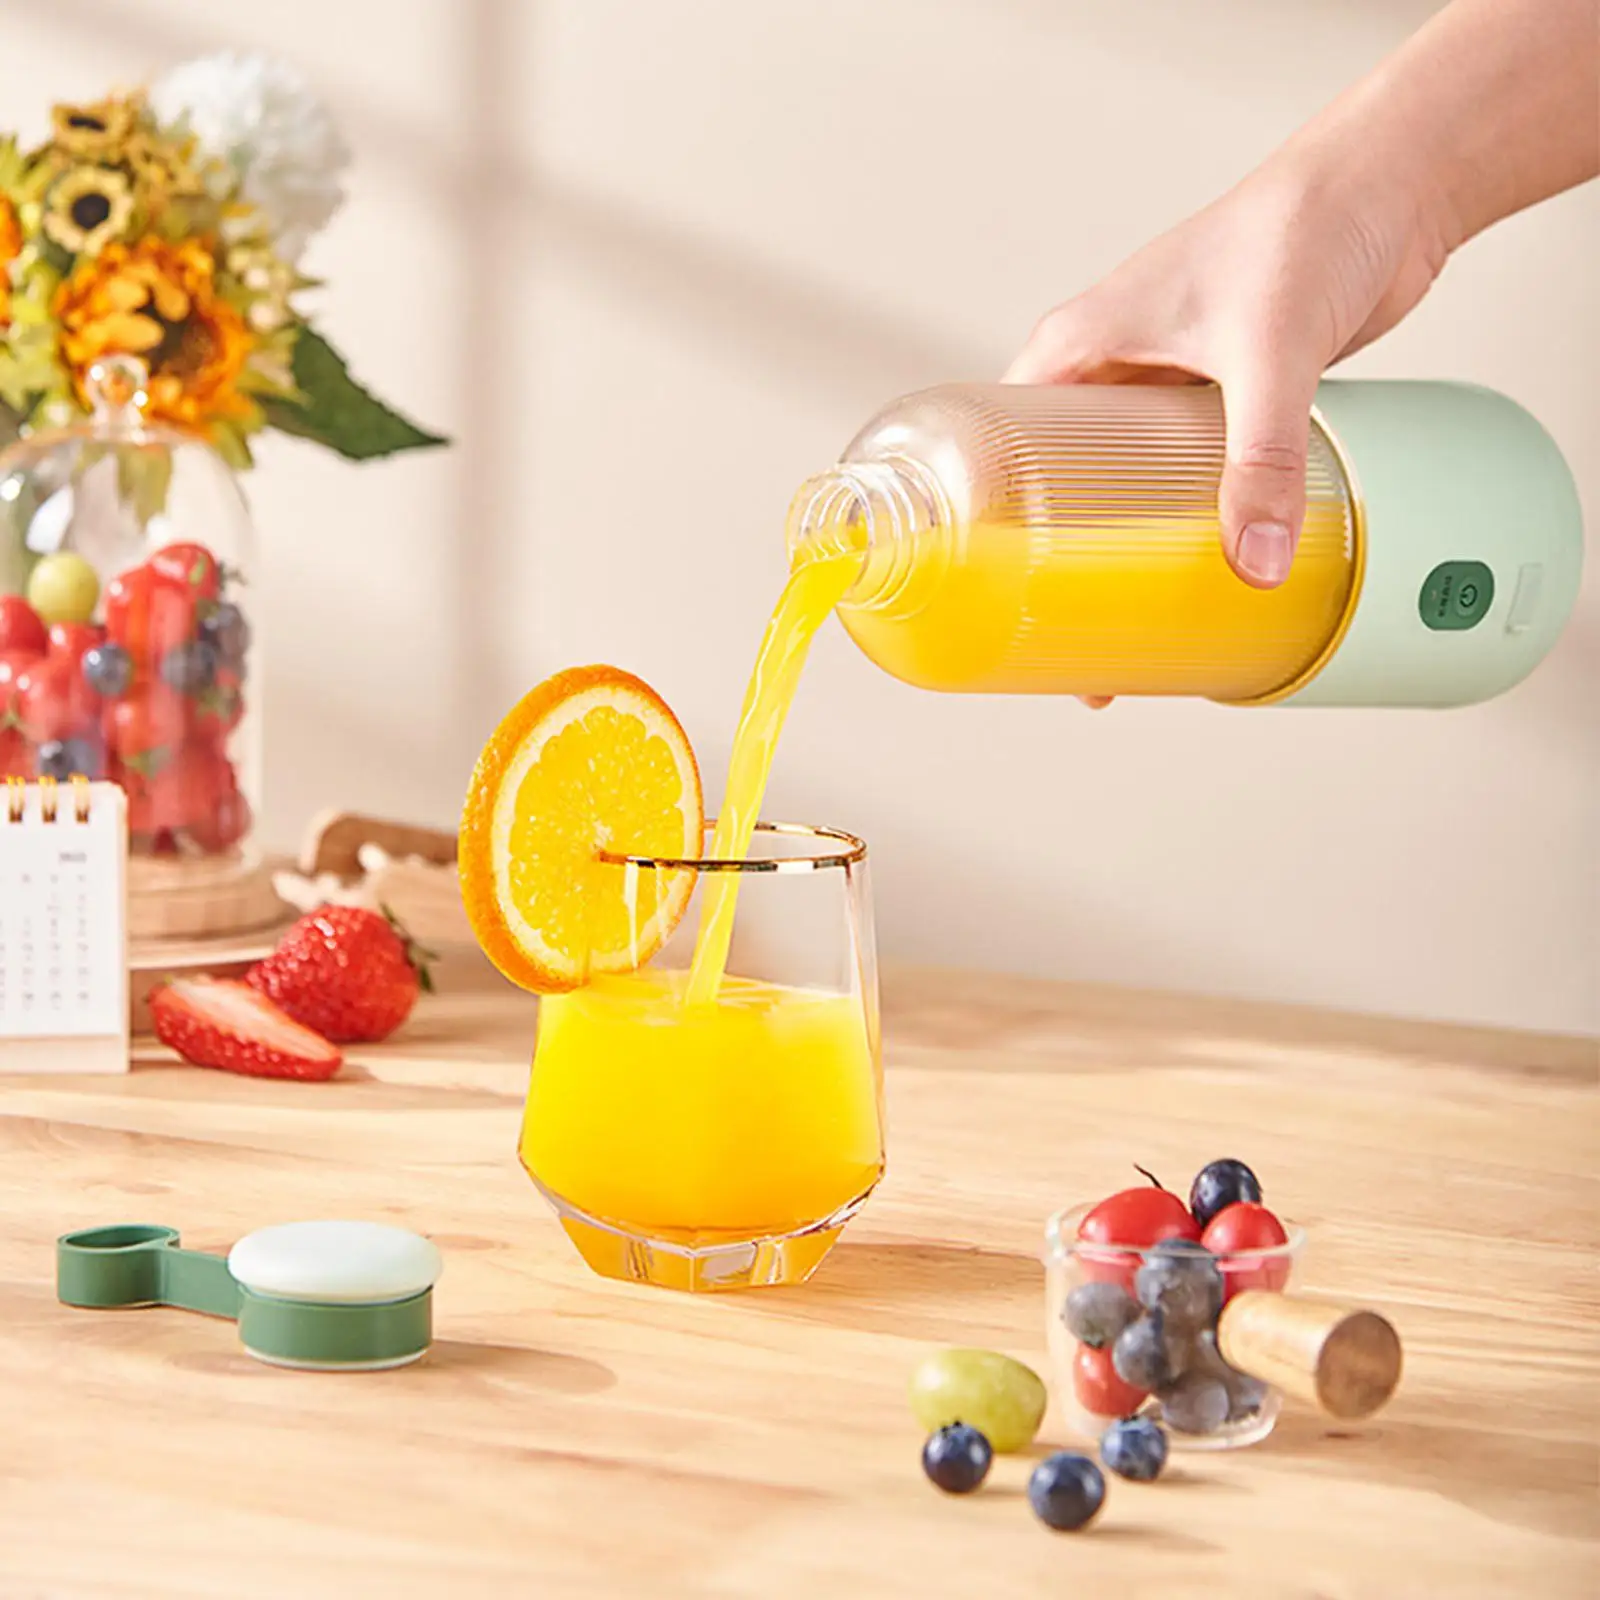 Multifunctional Electric Juicer Fruit Juicing Cup Fruits Juice Mixer for Making Juice Smoothies